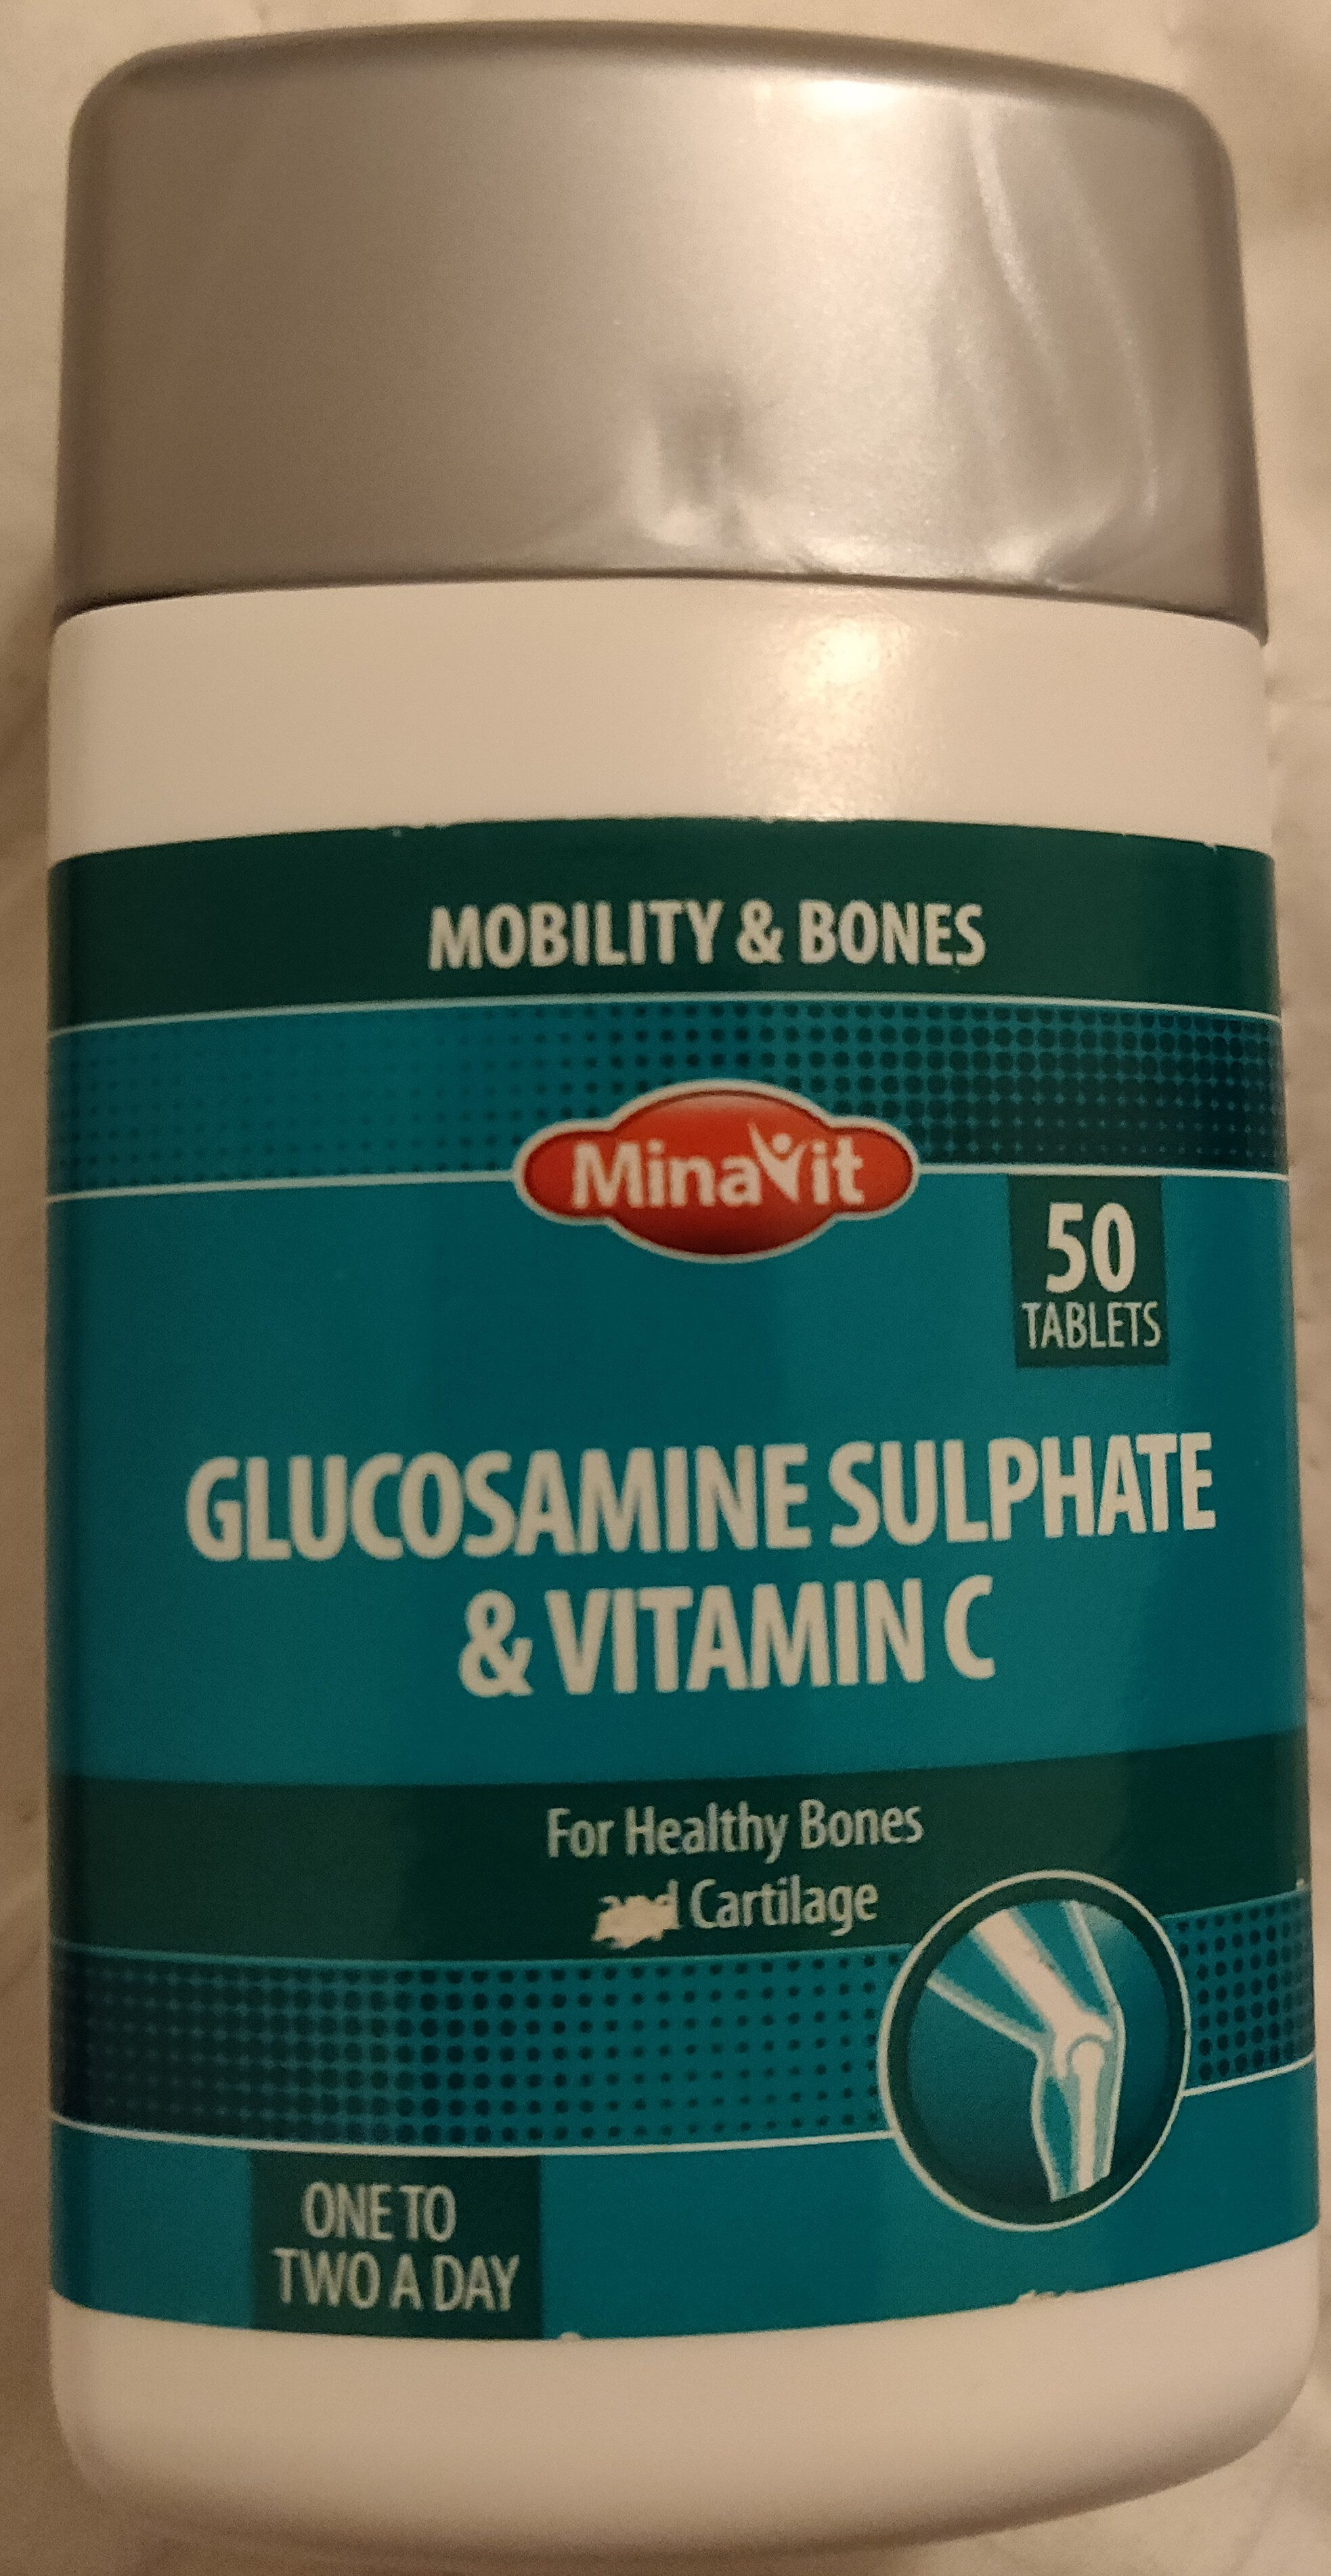 Glucosamine sulphate & vitamin C - Product